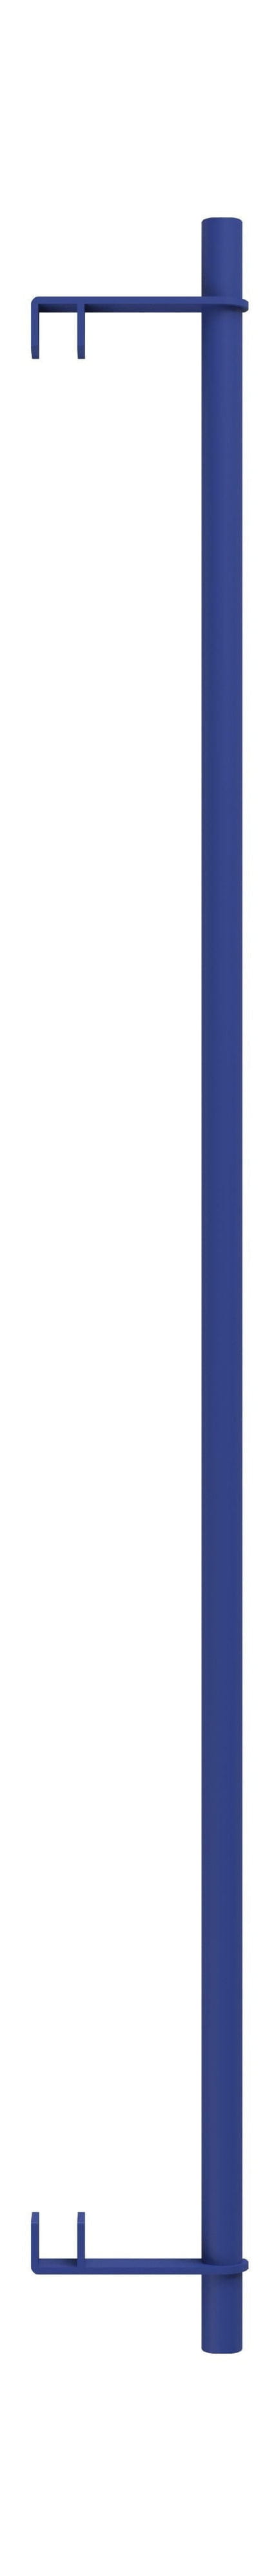 Moebe -Regalsystem/Wandregalkleidung Bar 85 cm, tiefblau